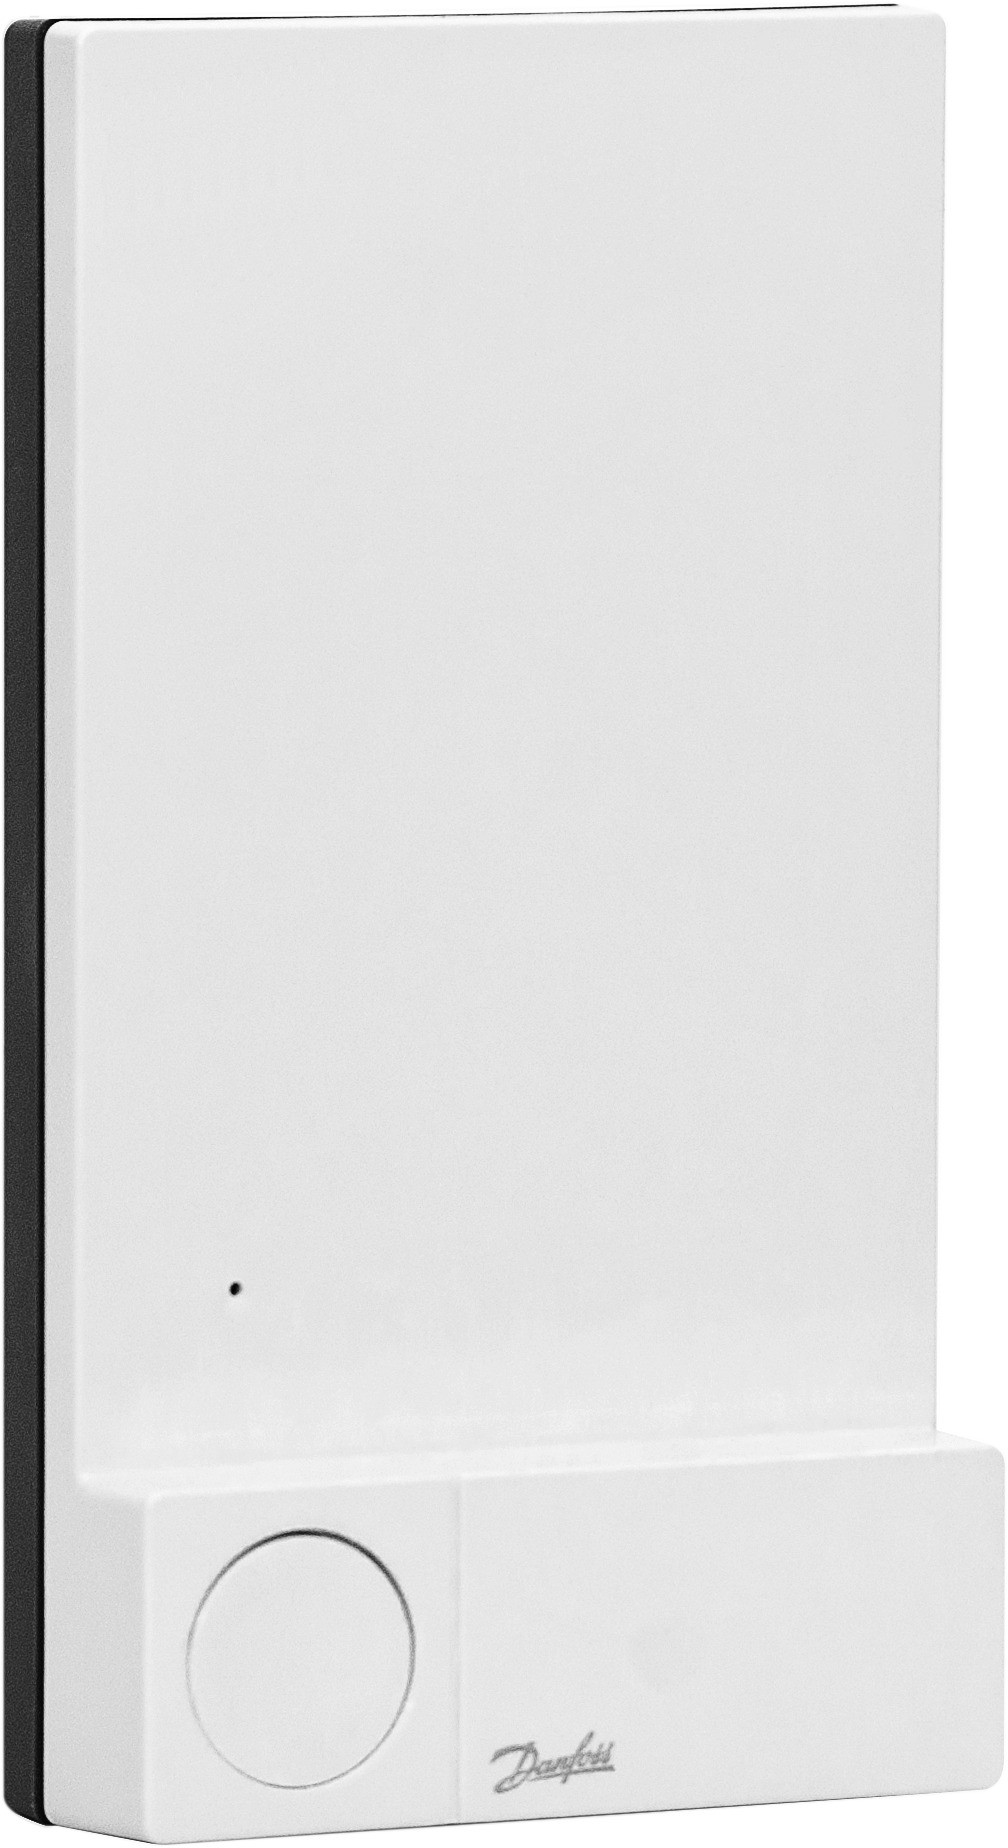 в продаже Модуль приложения Danfoss Icon 24В Zigbee (088U1130) - фото 3